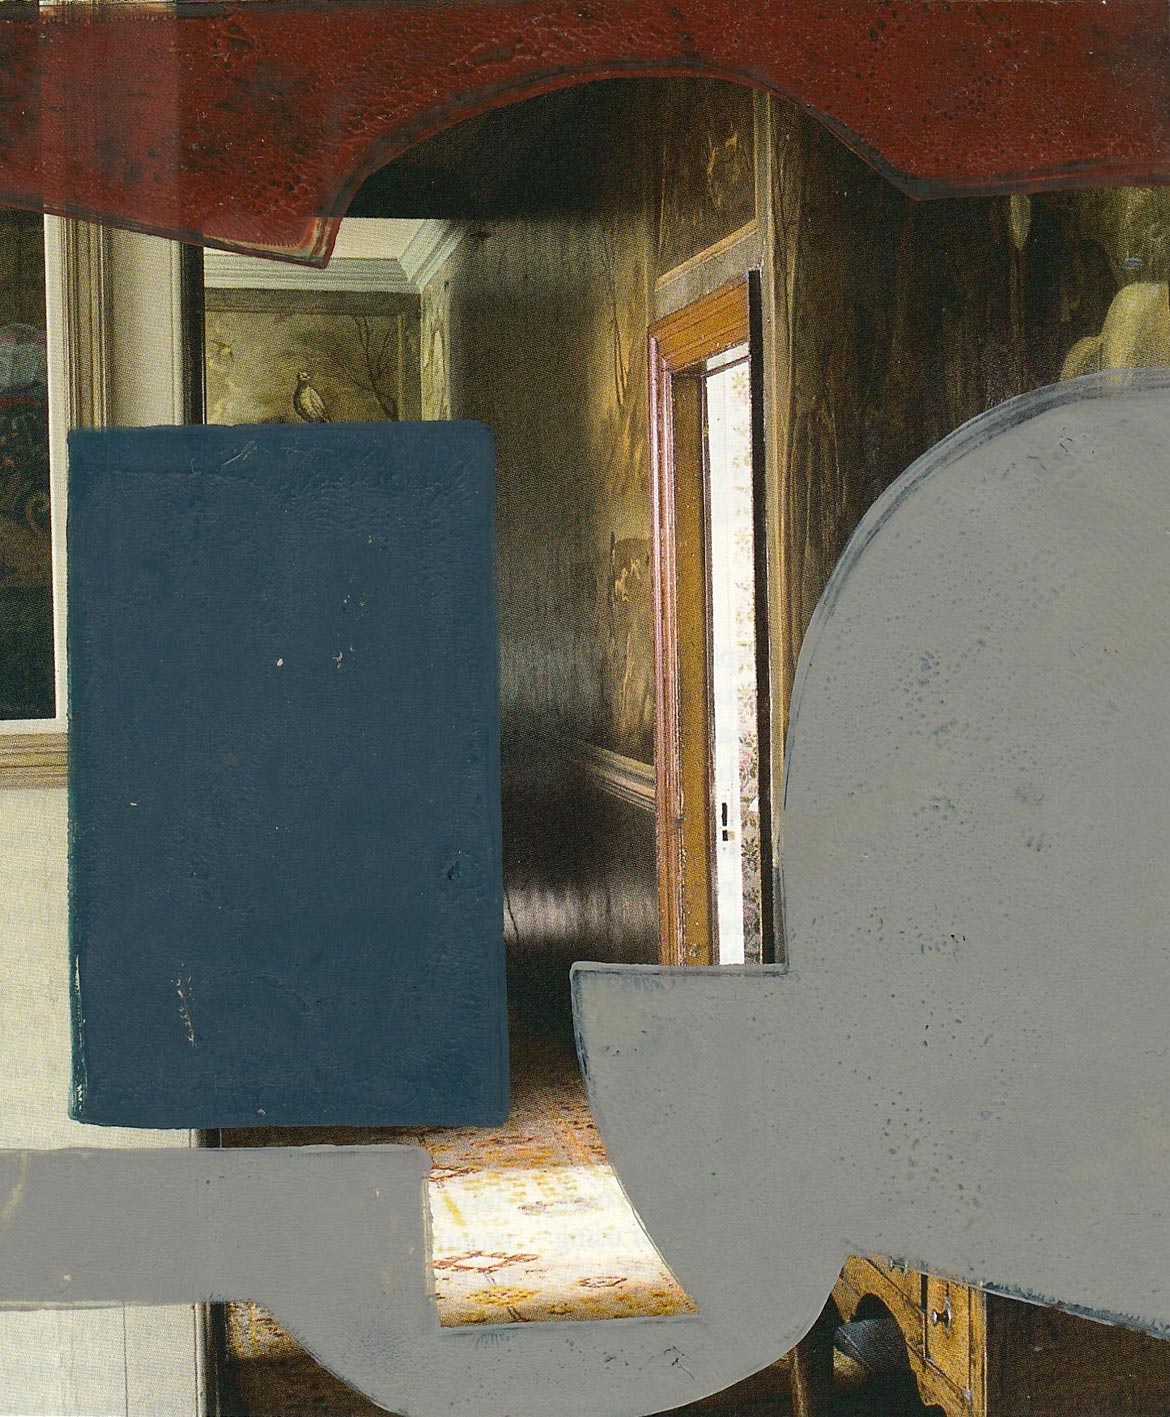 Interiors - Passage, monoprint 15 x 13 cm